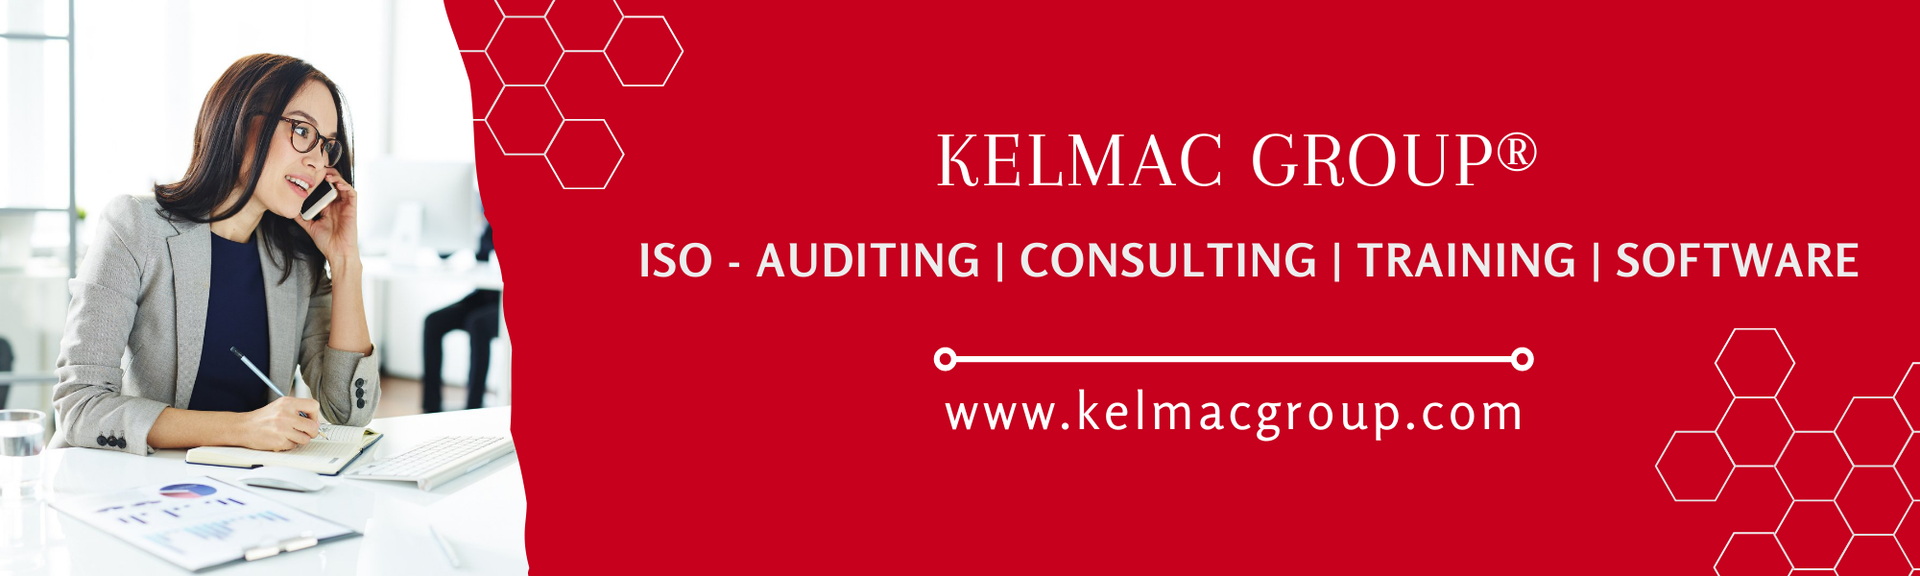 Kelmac Group